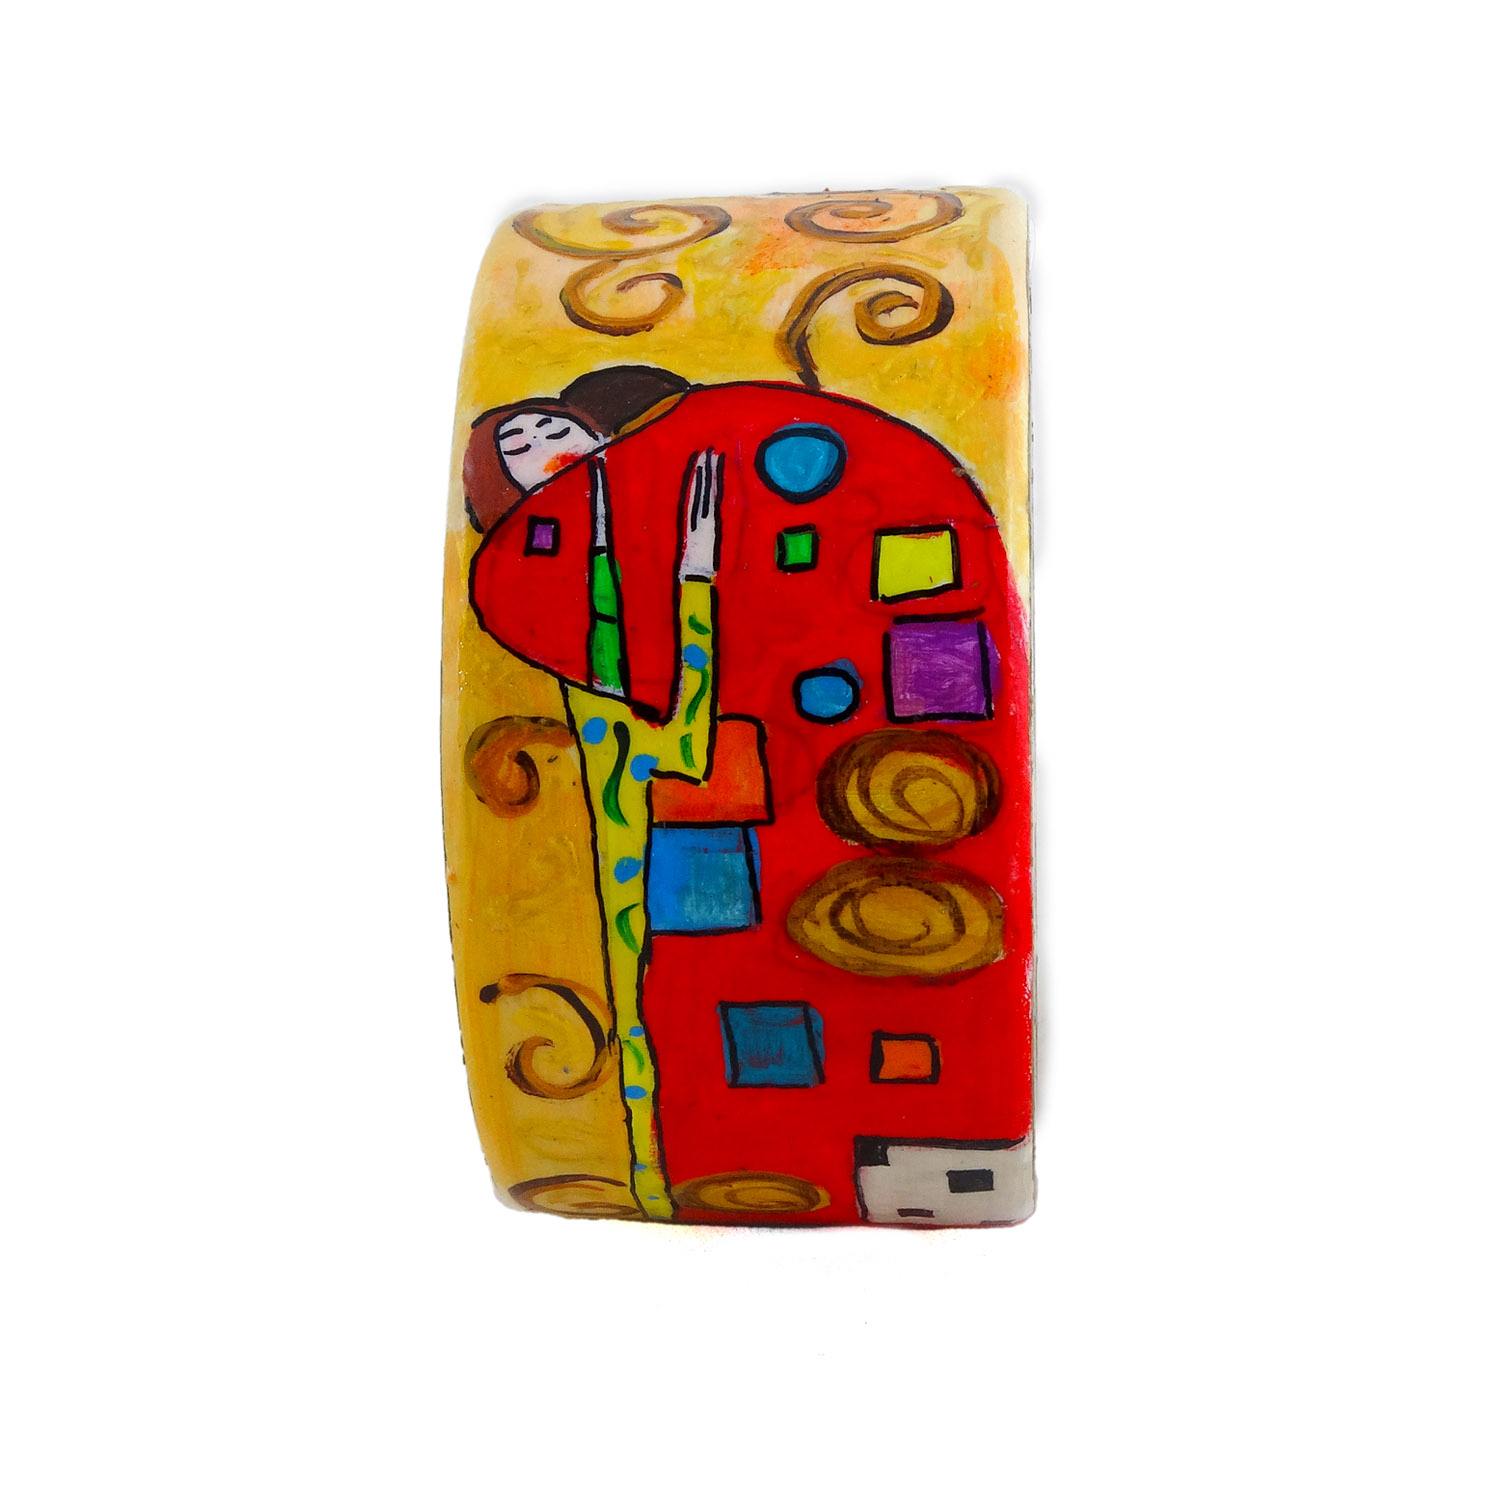 Hand painted bracelet - The embrace by Klimt